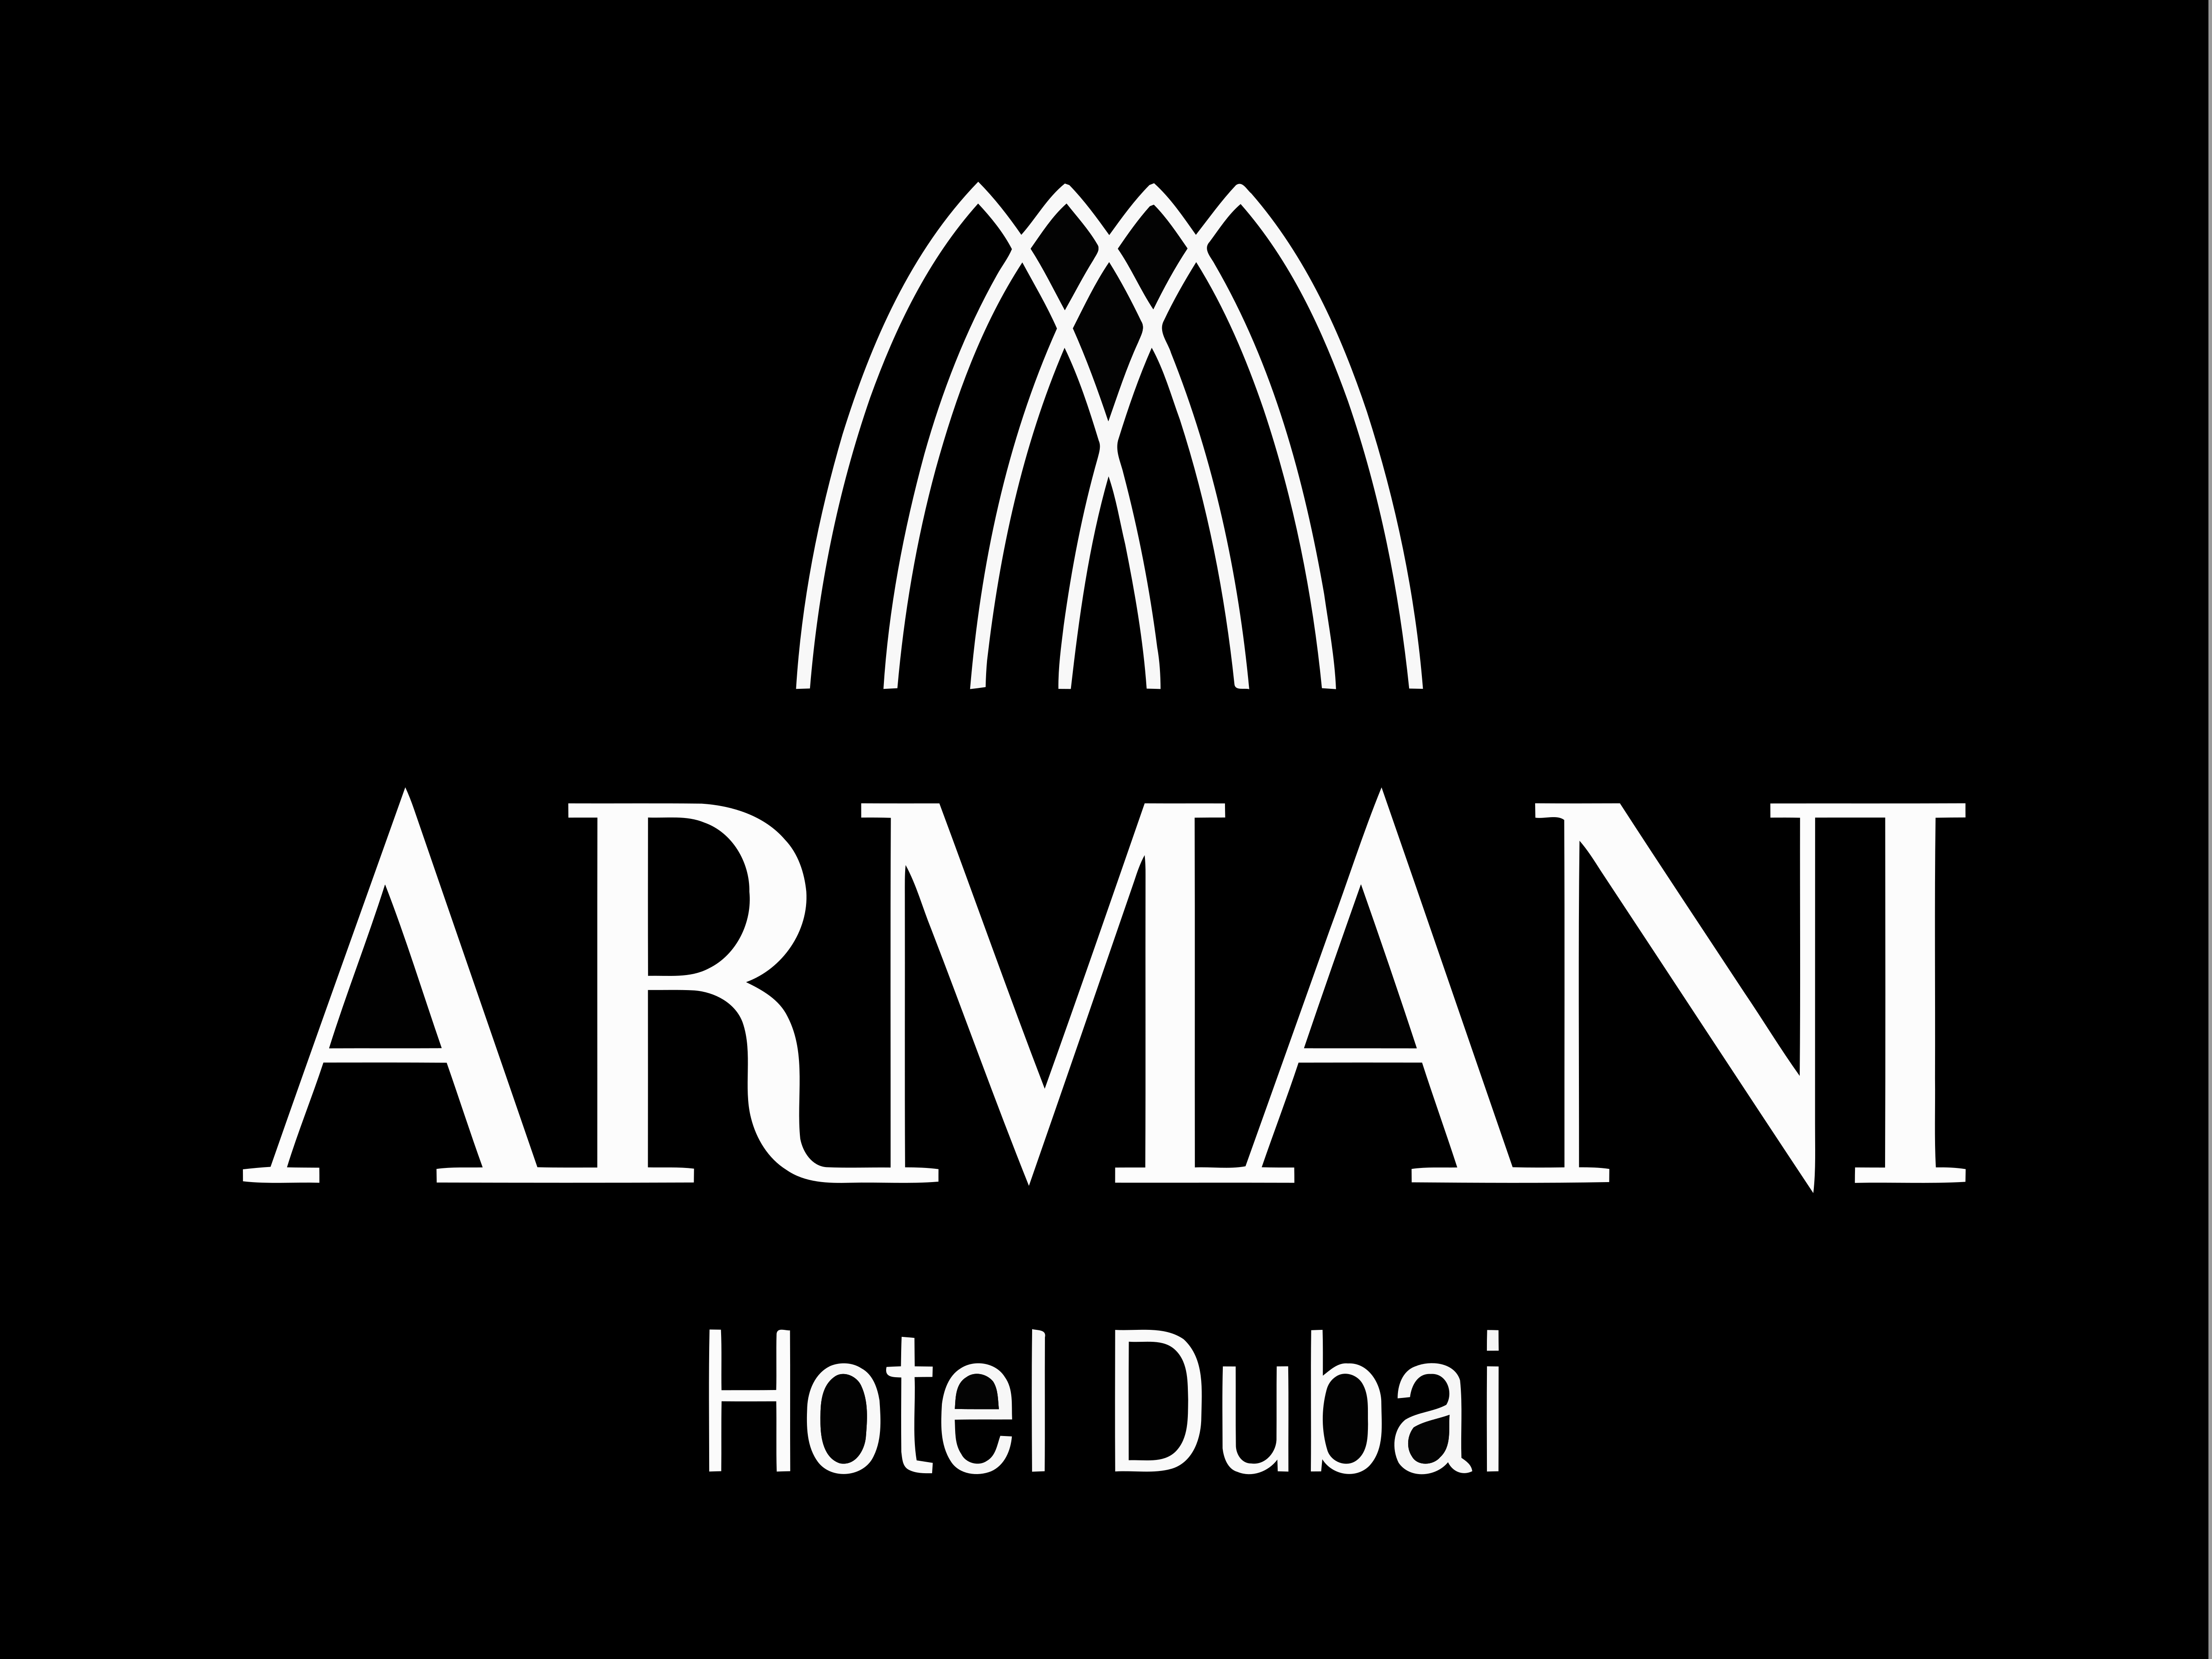 Armani Hotel Dubai – Logos Download